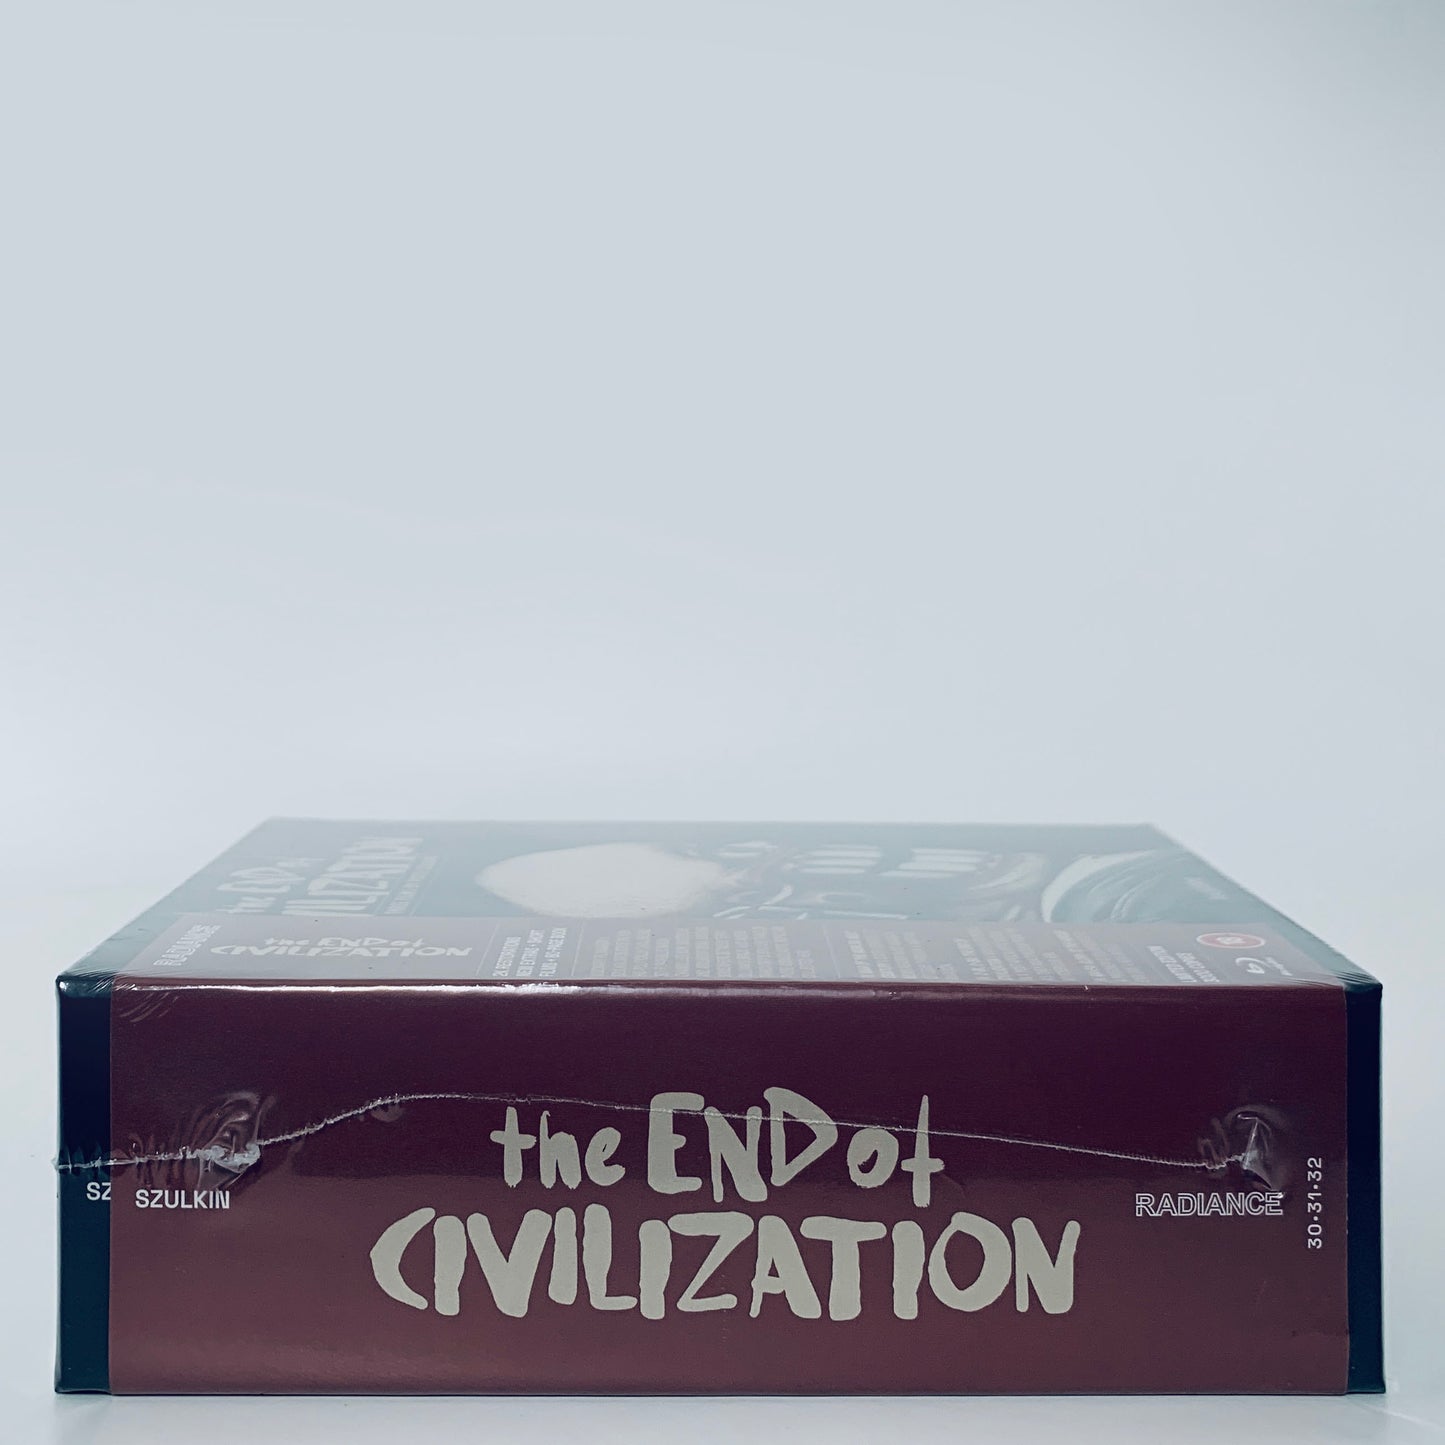 End of Civilization Three Films by Piotr Szulkin Limited Blu-ray Radiance